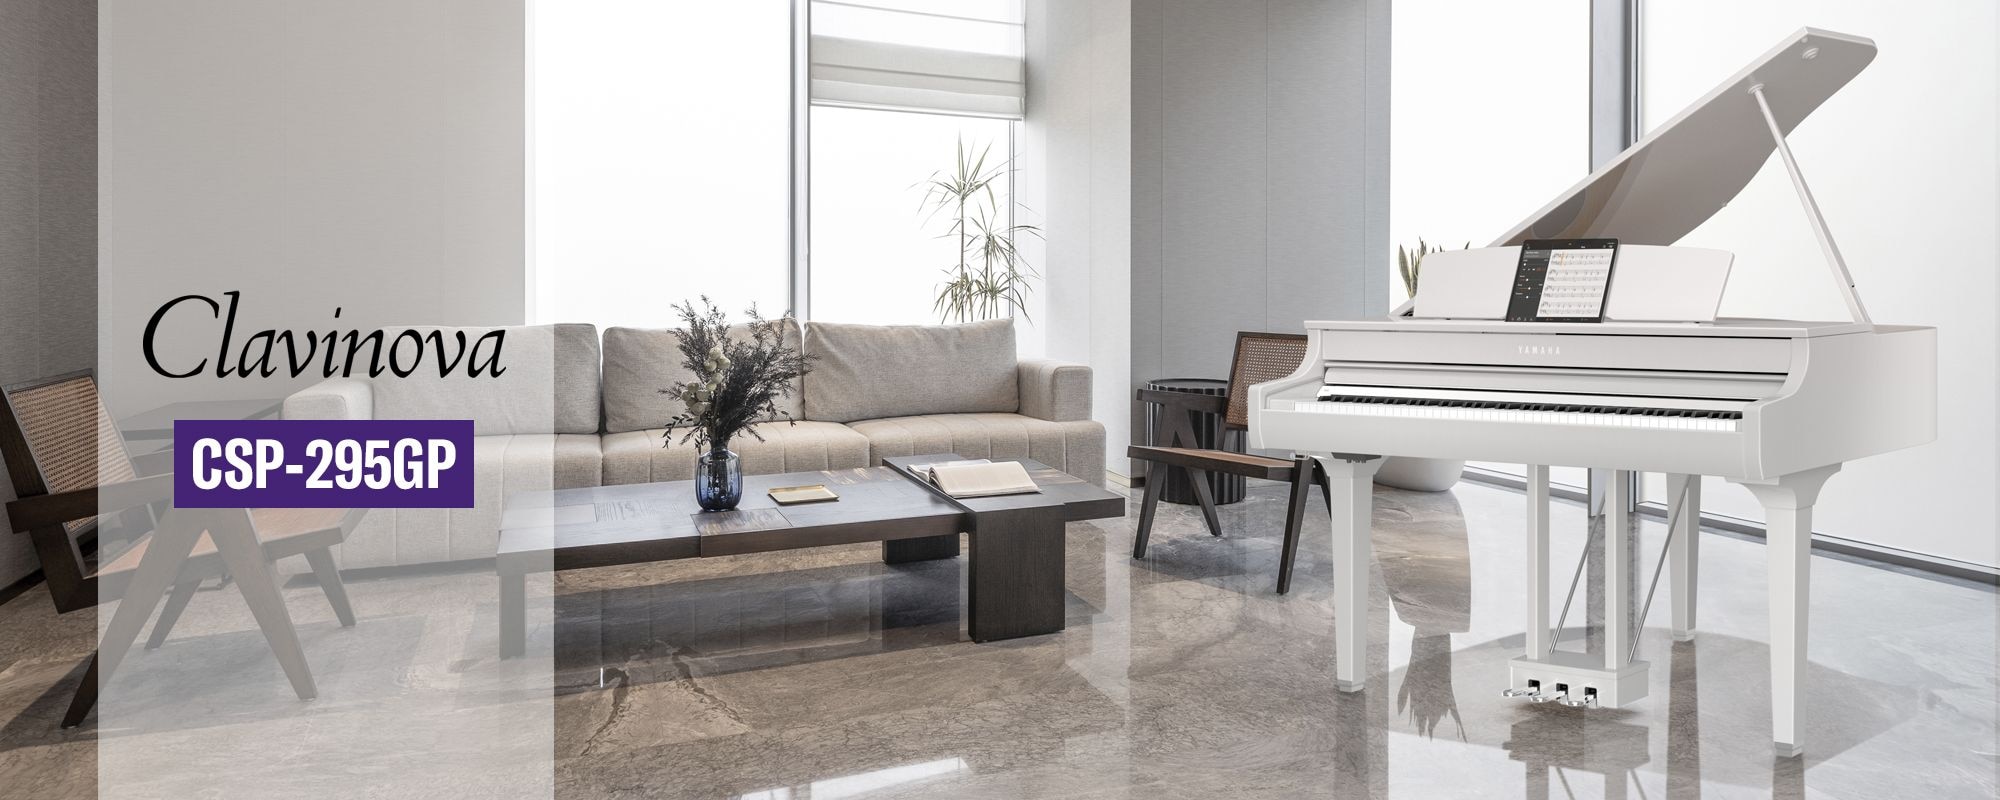 Lifestyle image of white Yamaha Clavinova CSP-295GP Digital Piano